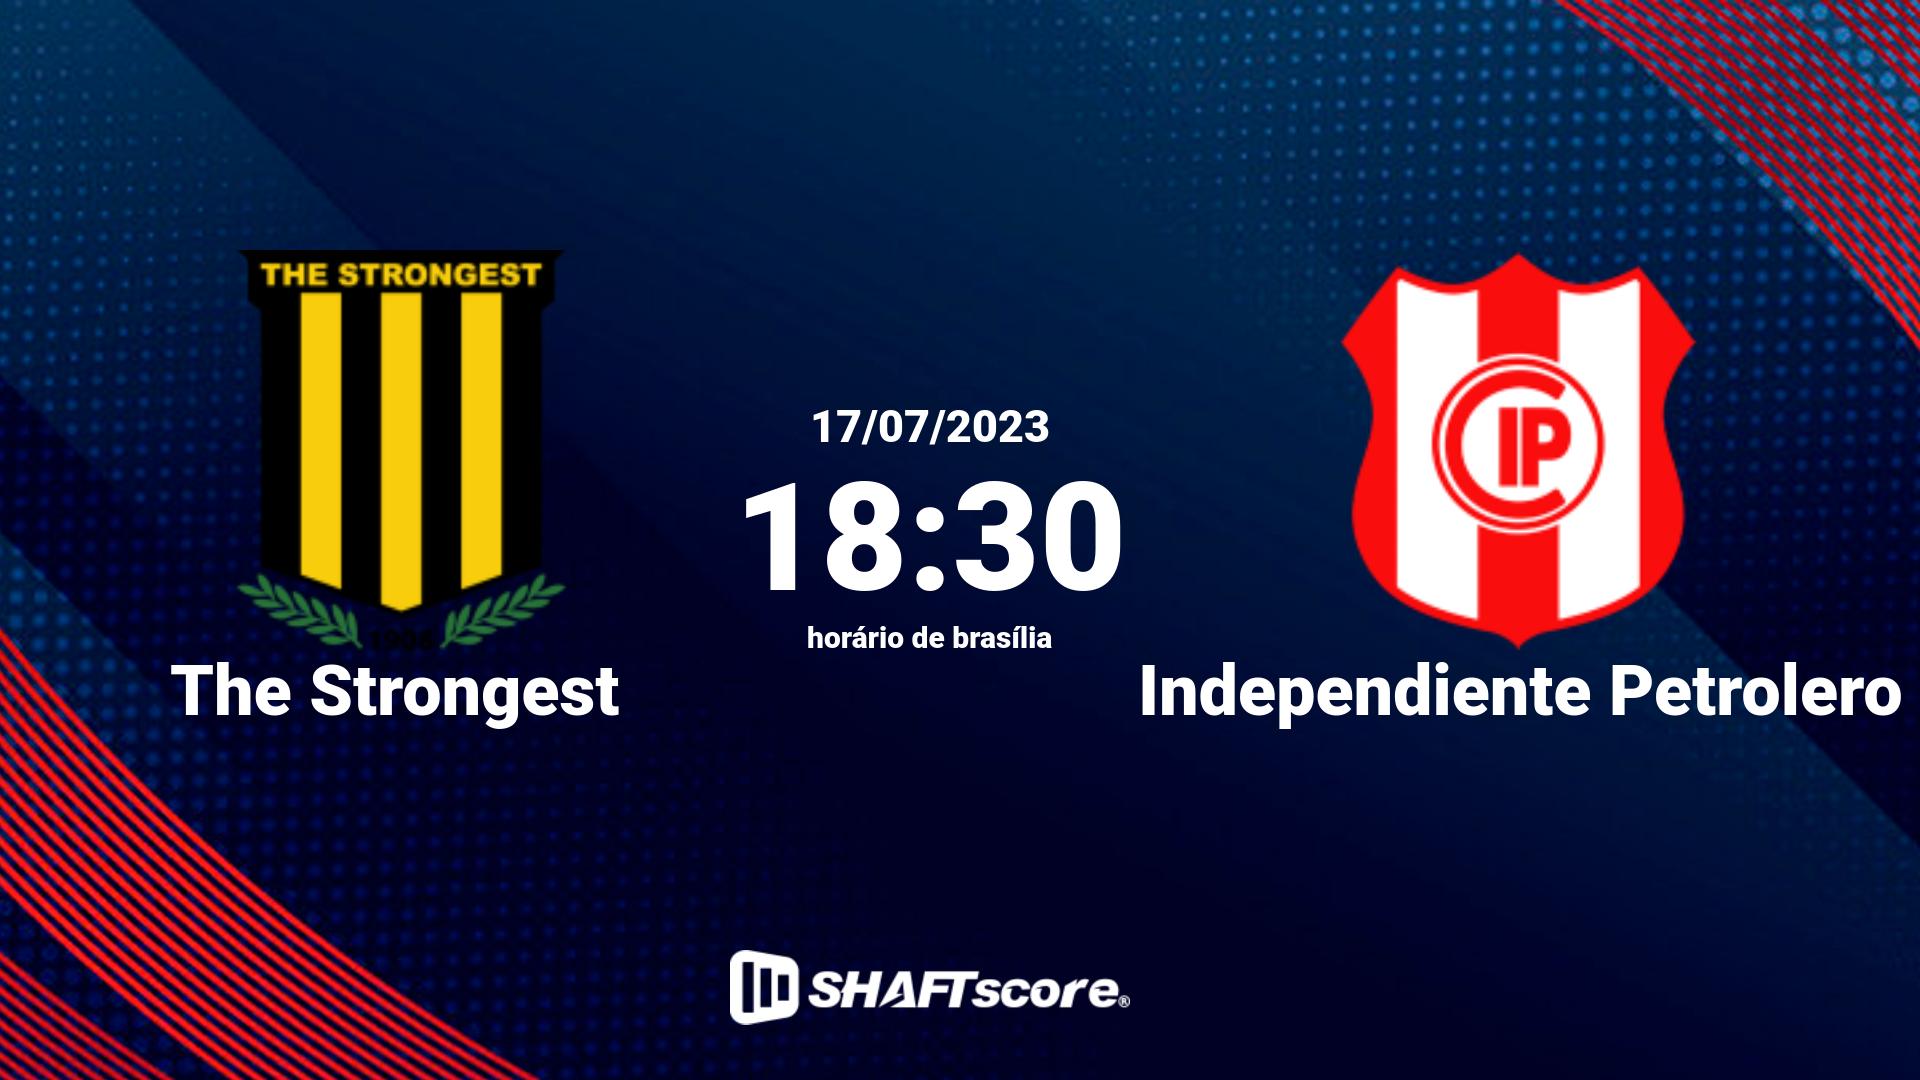 Estatísticas do jogo The Strongest vs Independiente Petrolero 17.07 18:30